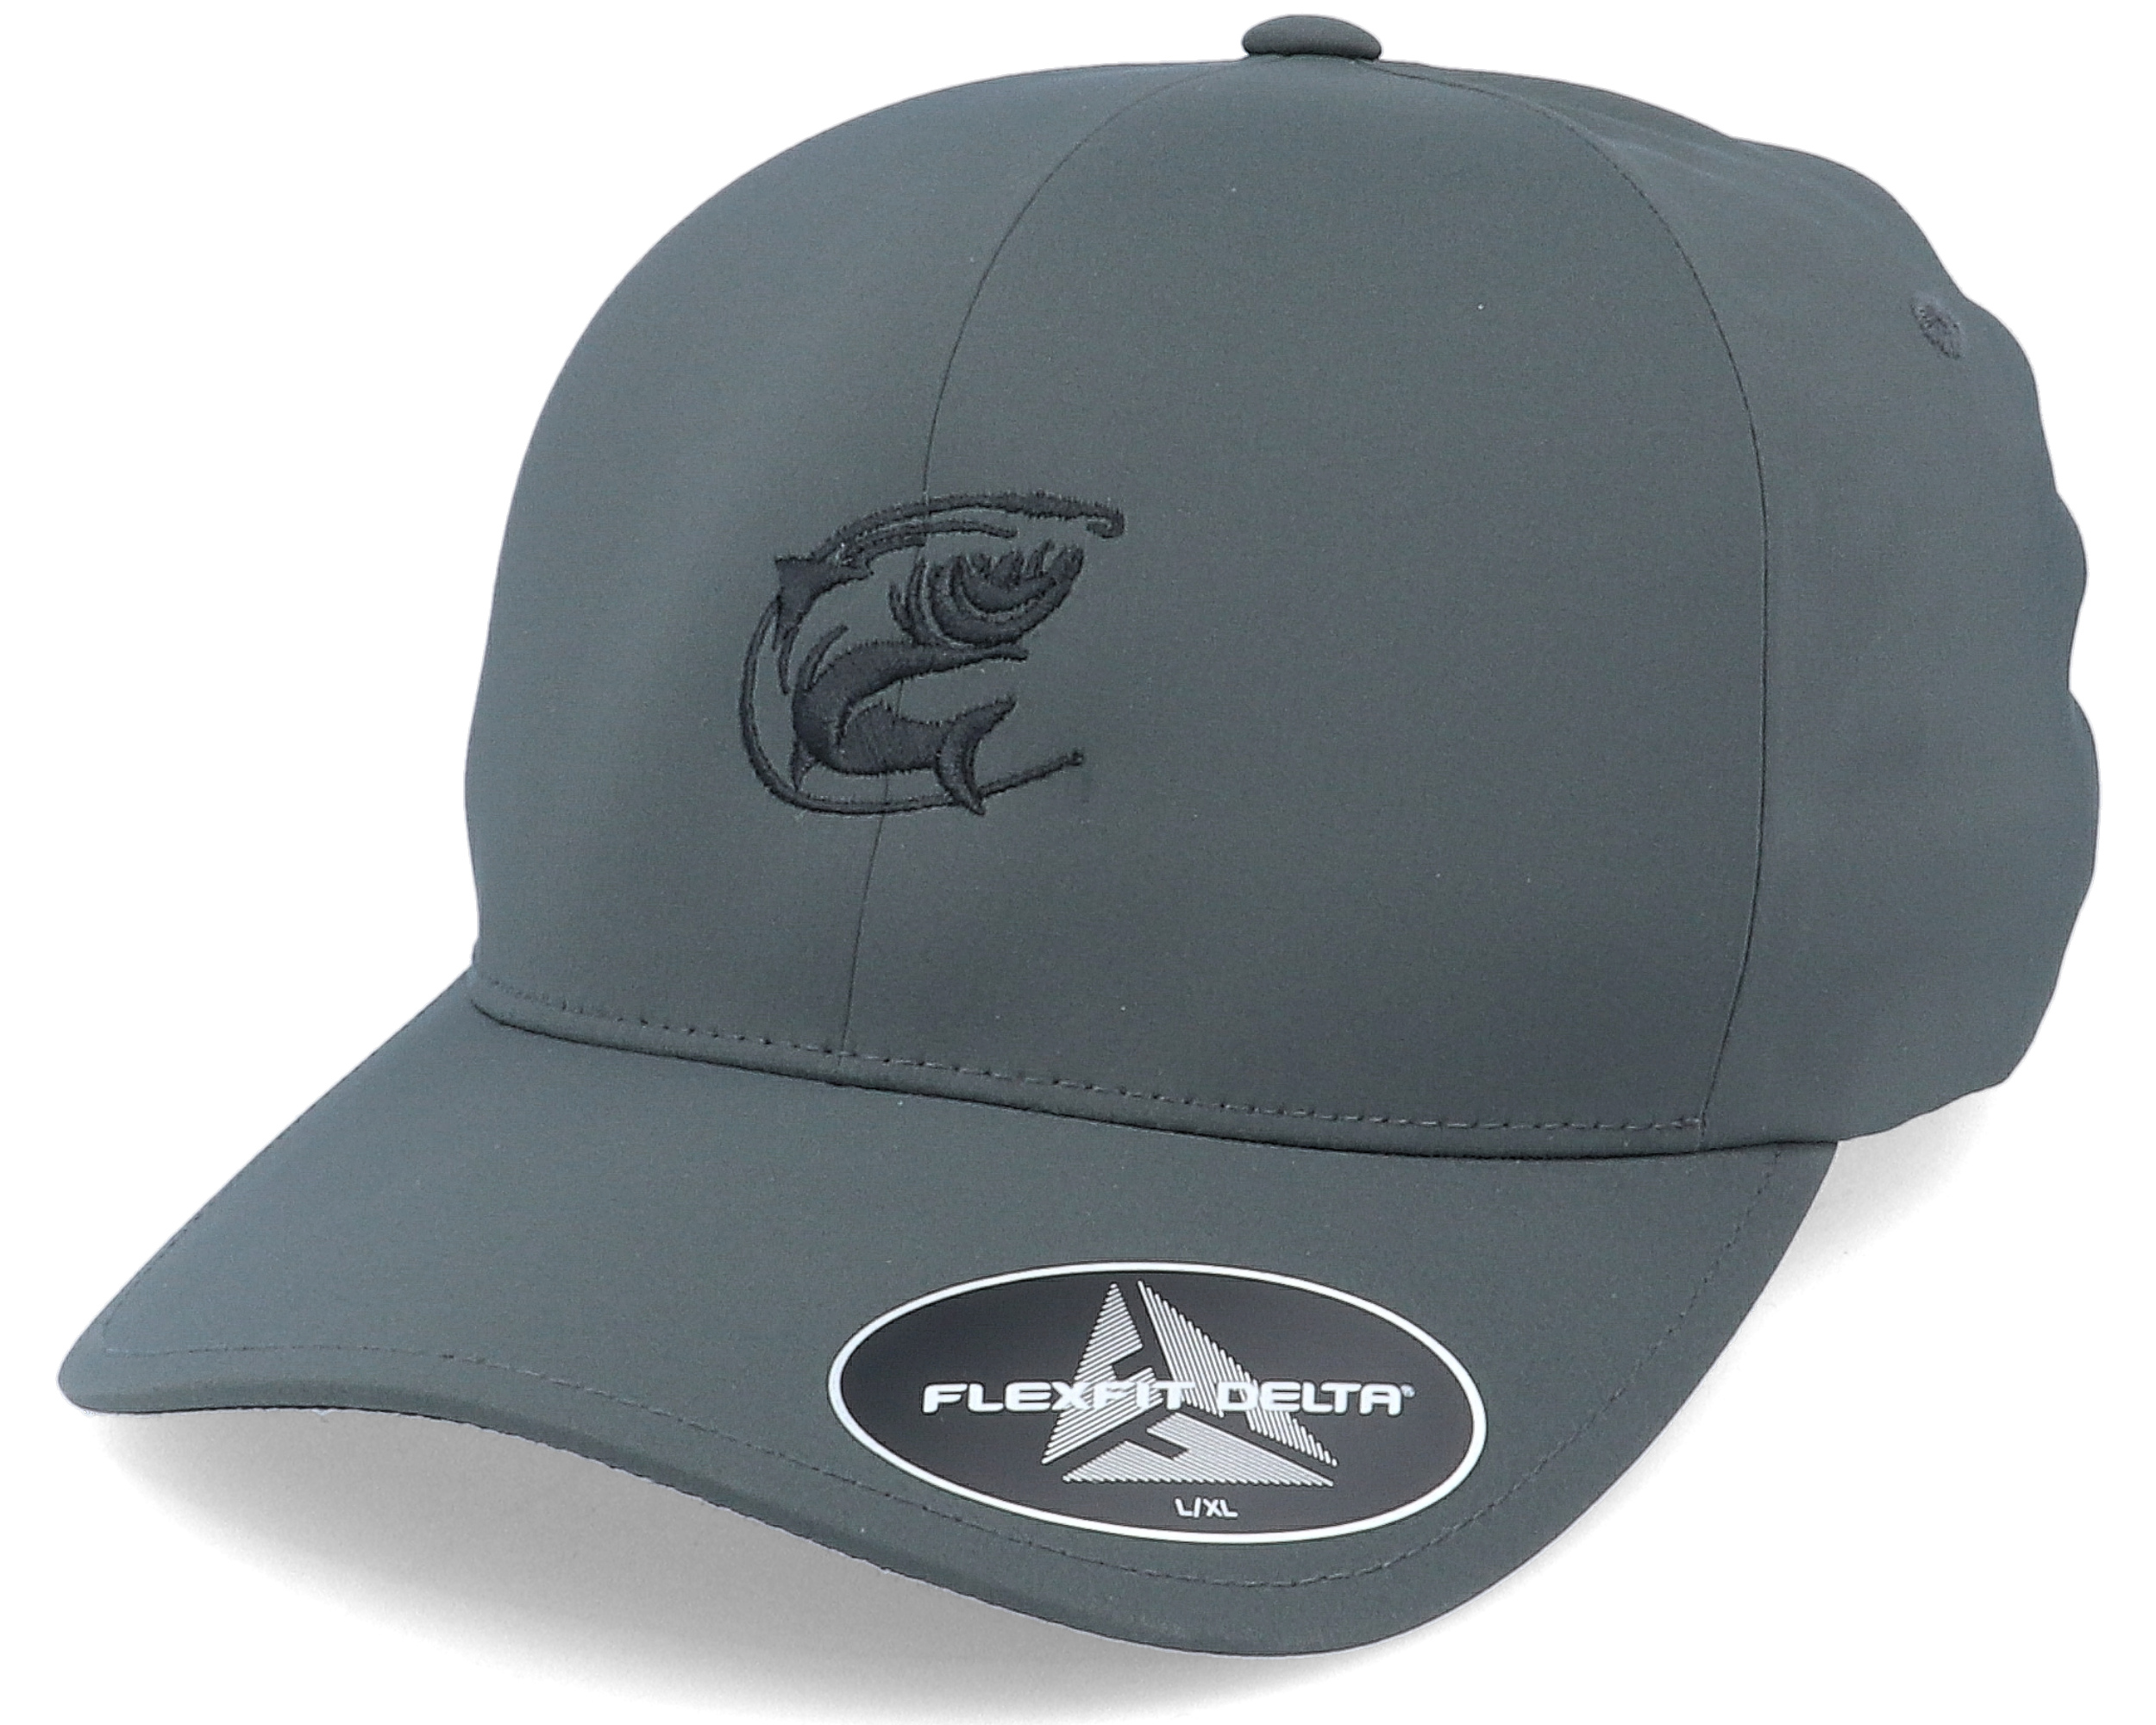 Skillfish - Grey flexfit Cap - Oval Fishing Logo Delta Fit Char Flexfit @ Hatstore